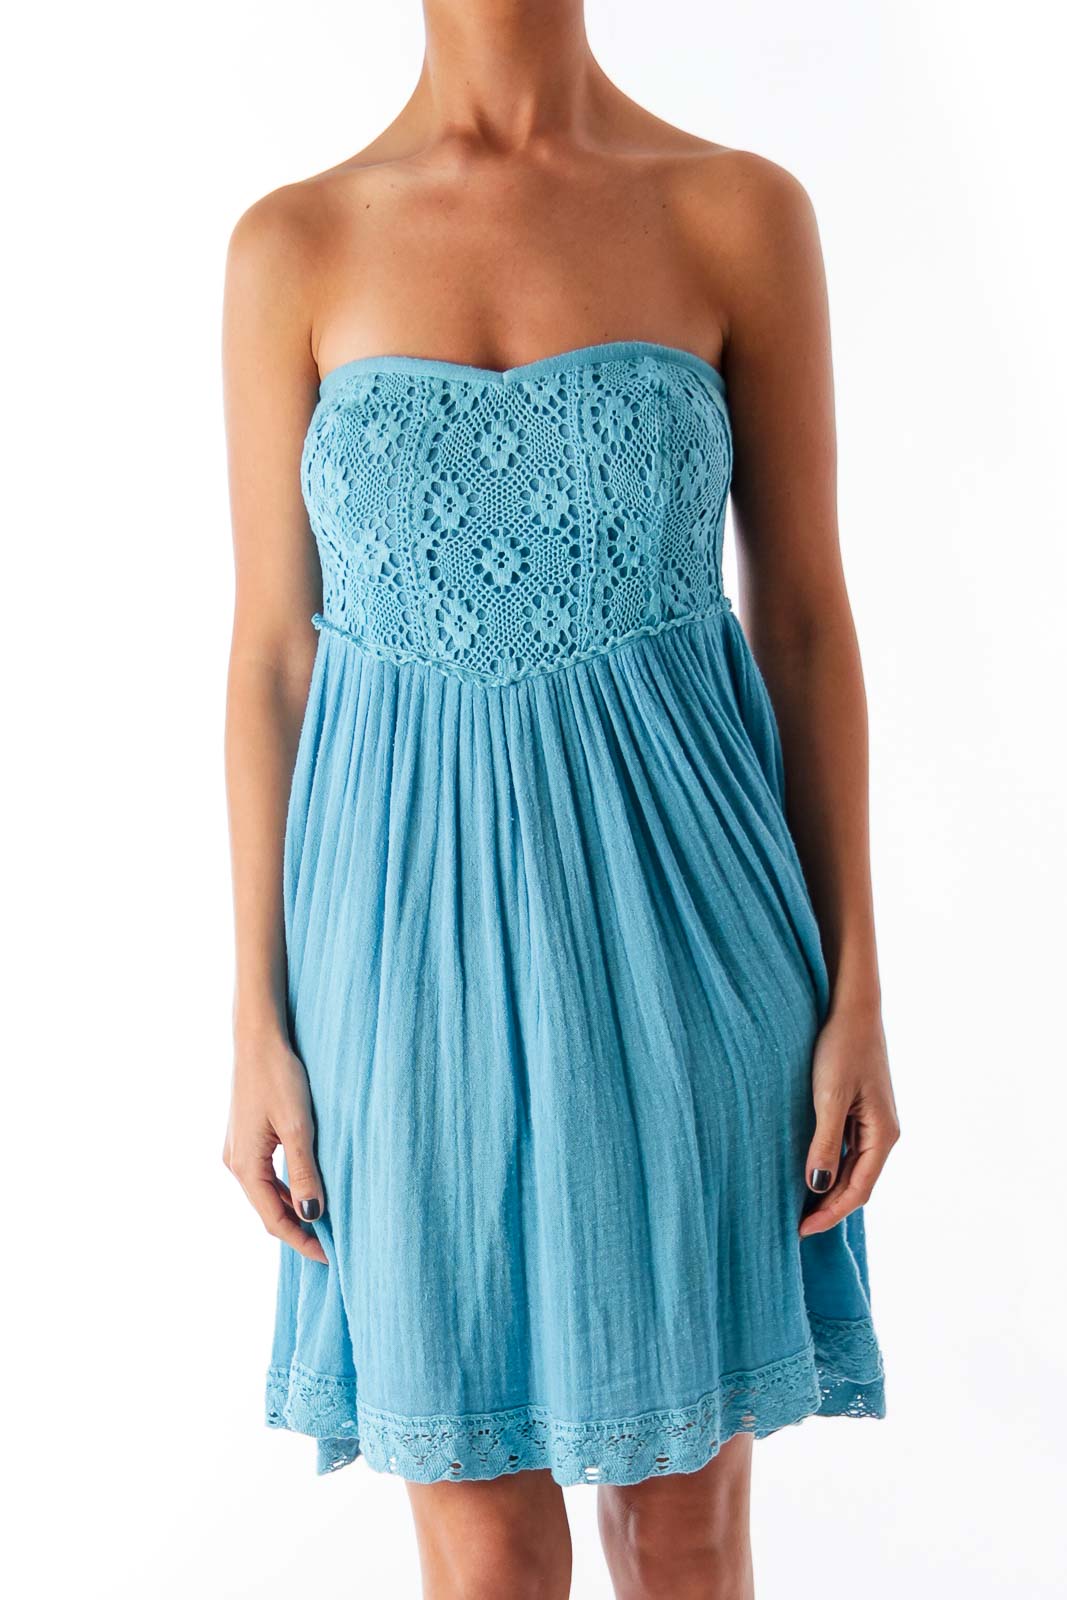 Blue Strapless Crochet Dress Front